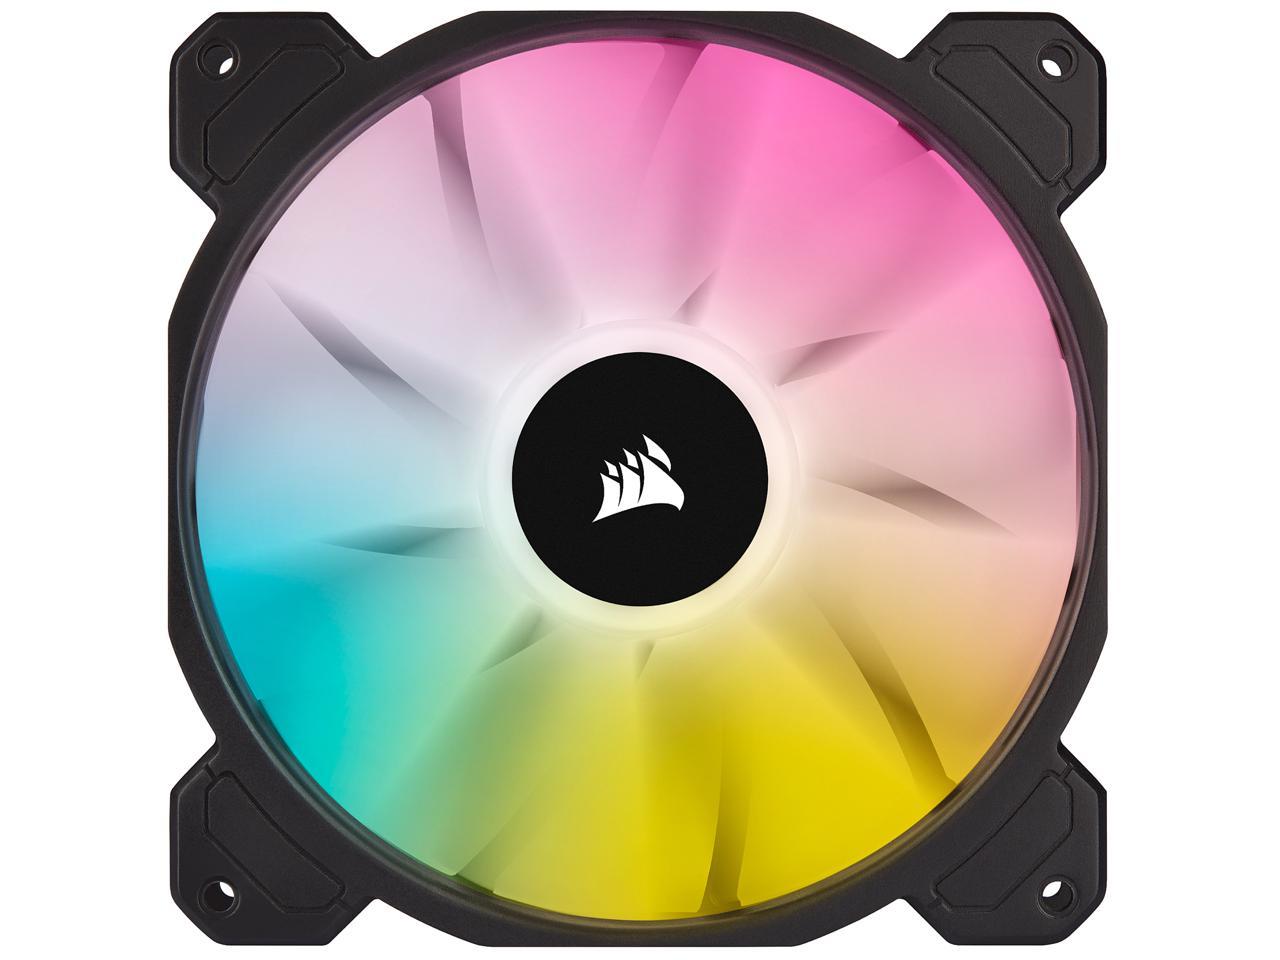 CORSAIR iCUE SP140 RGB ELITE Performance 140mm PWM Single Fan, CO-9050110-WW